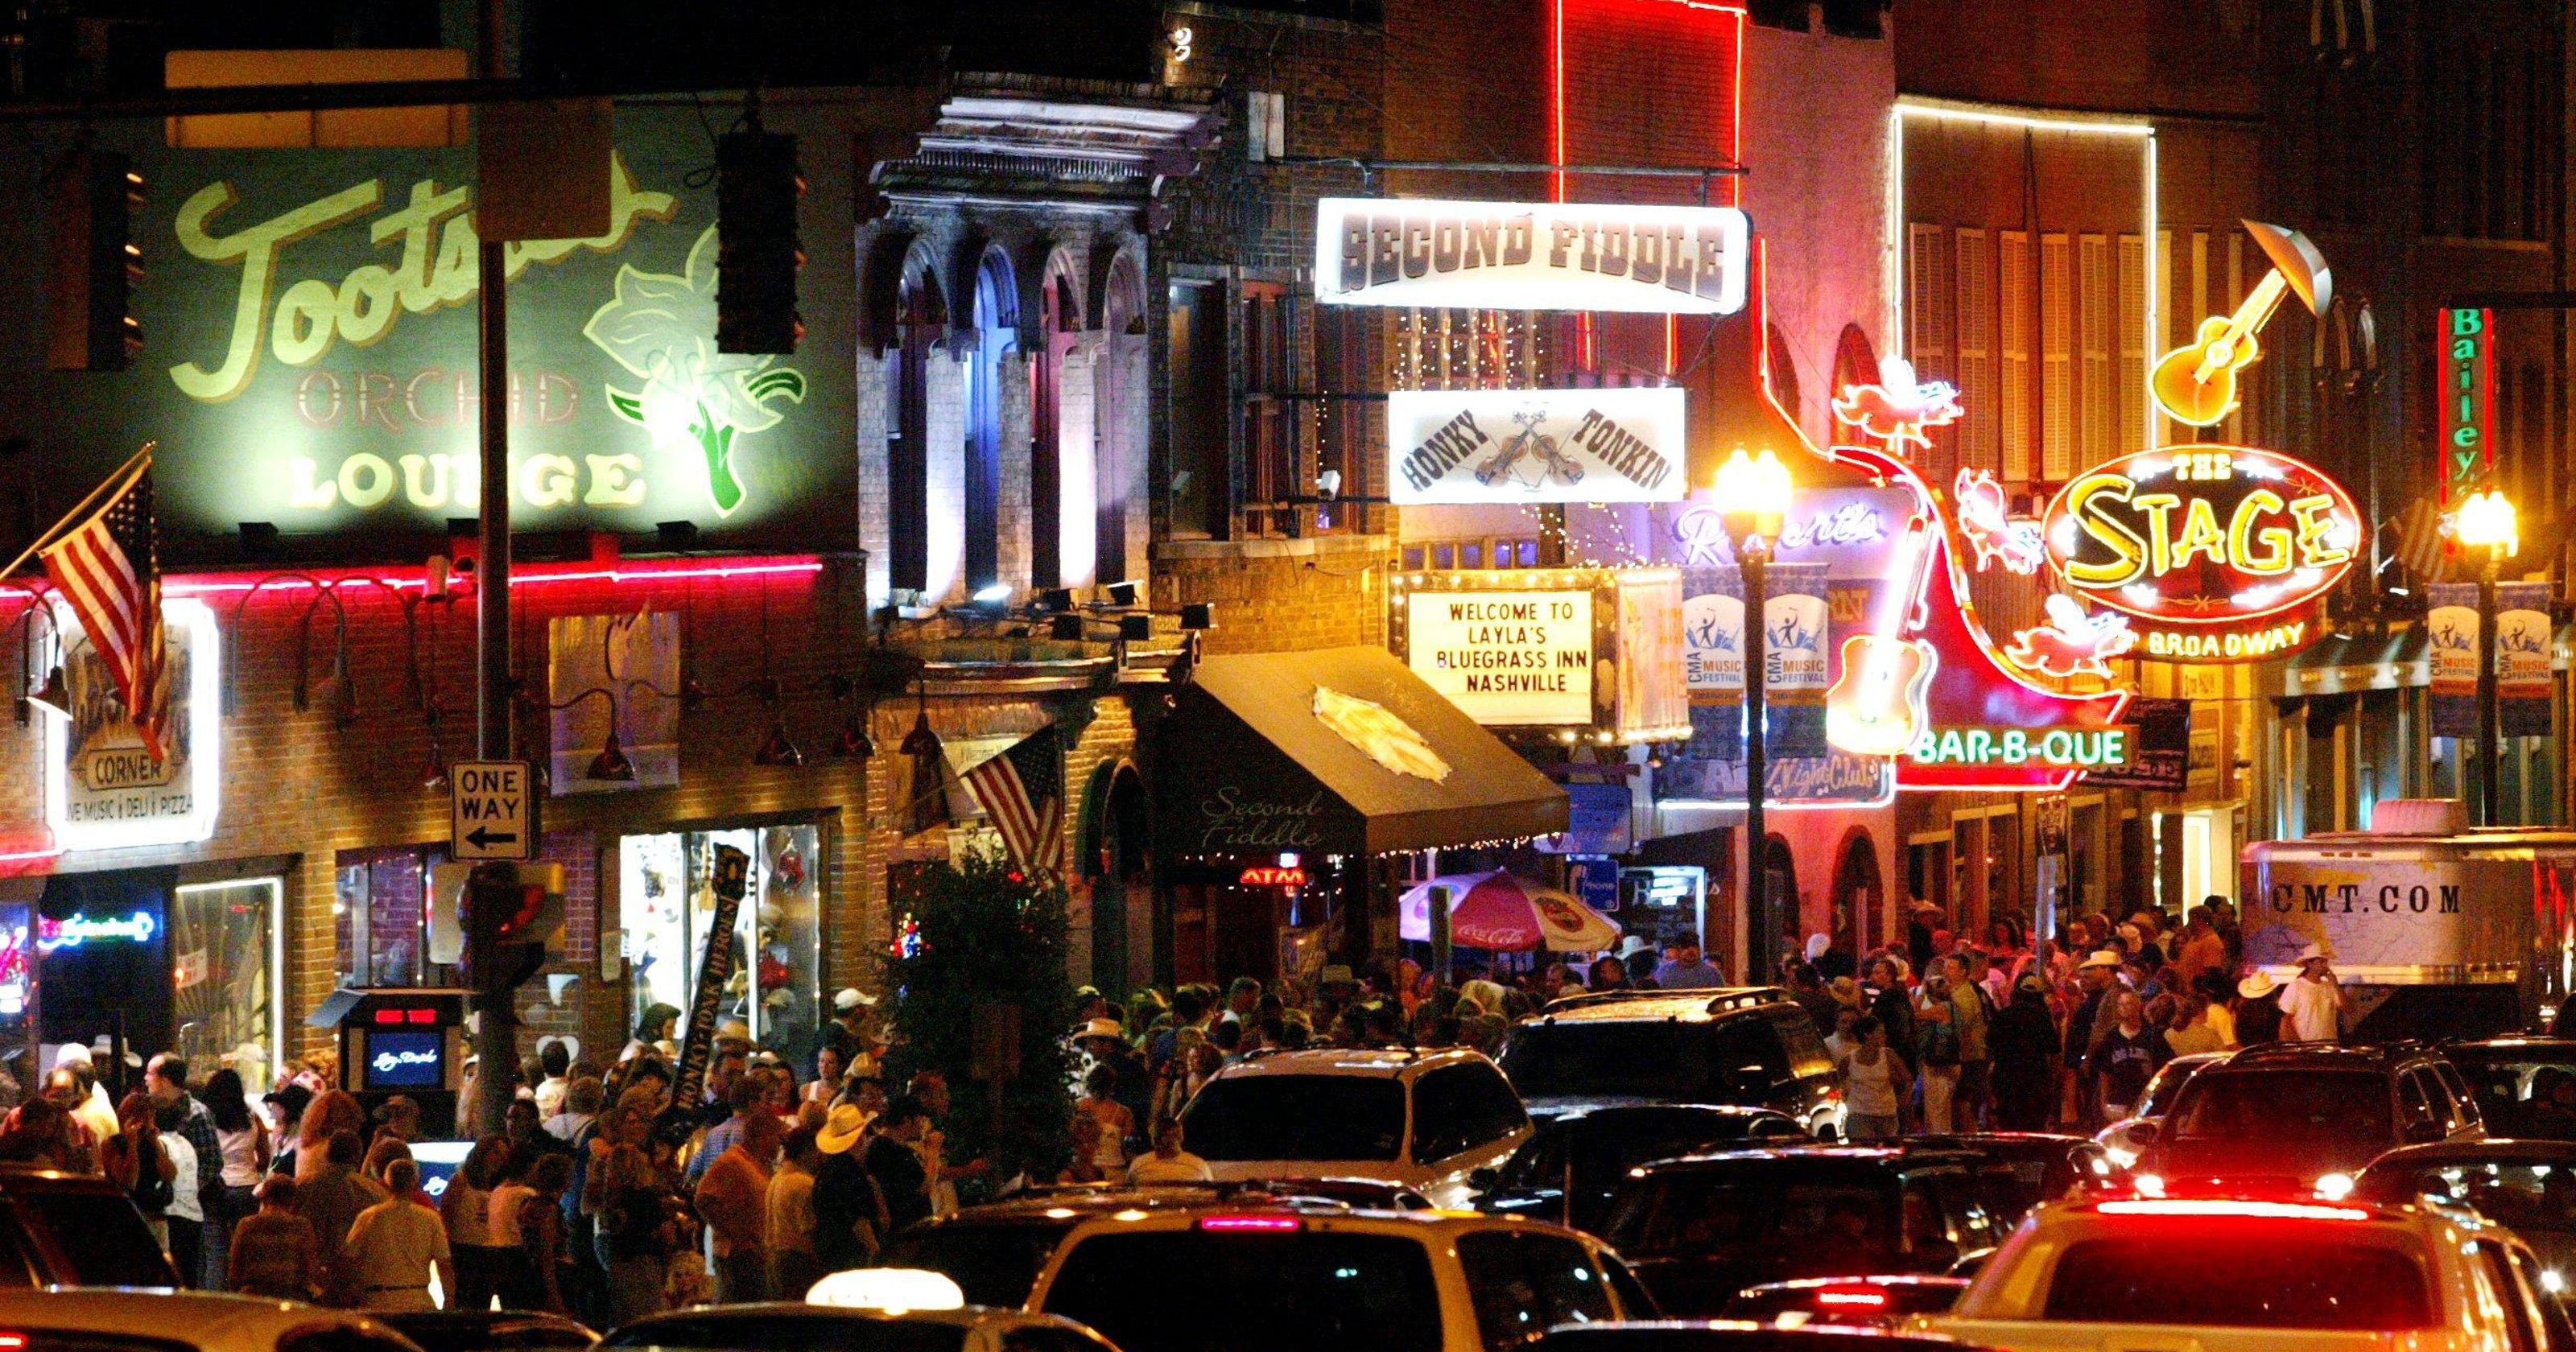 Big name bars crowd into Nashville’s honky-tonk scene